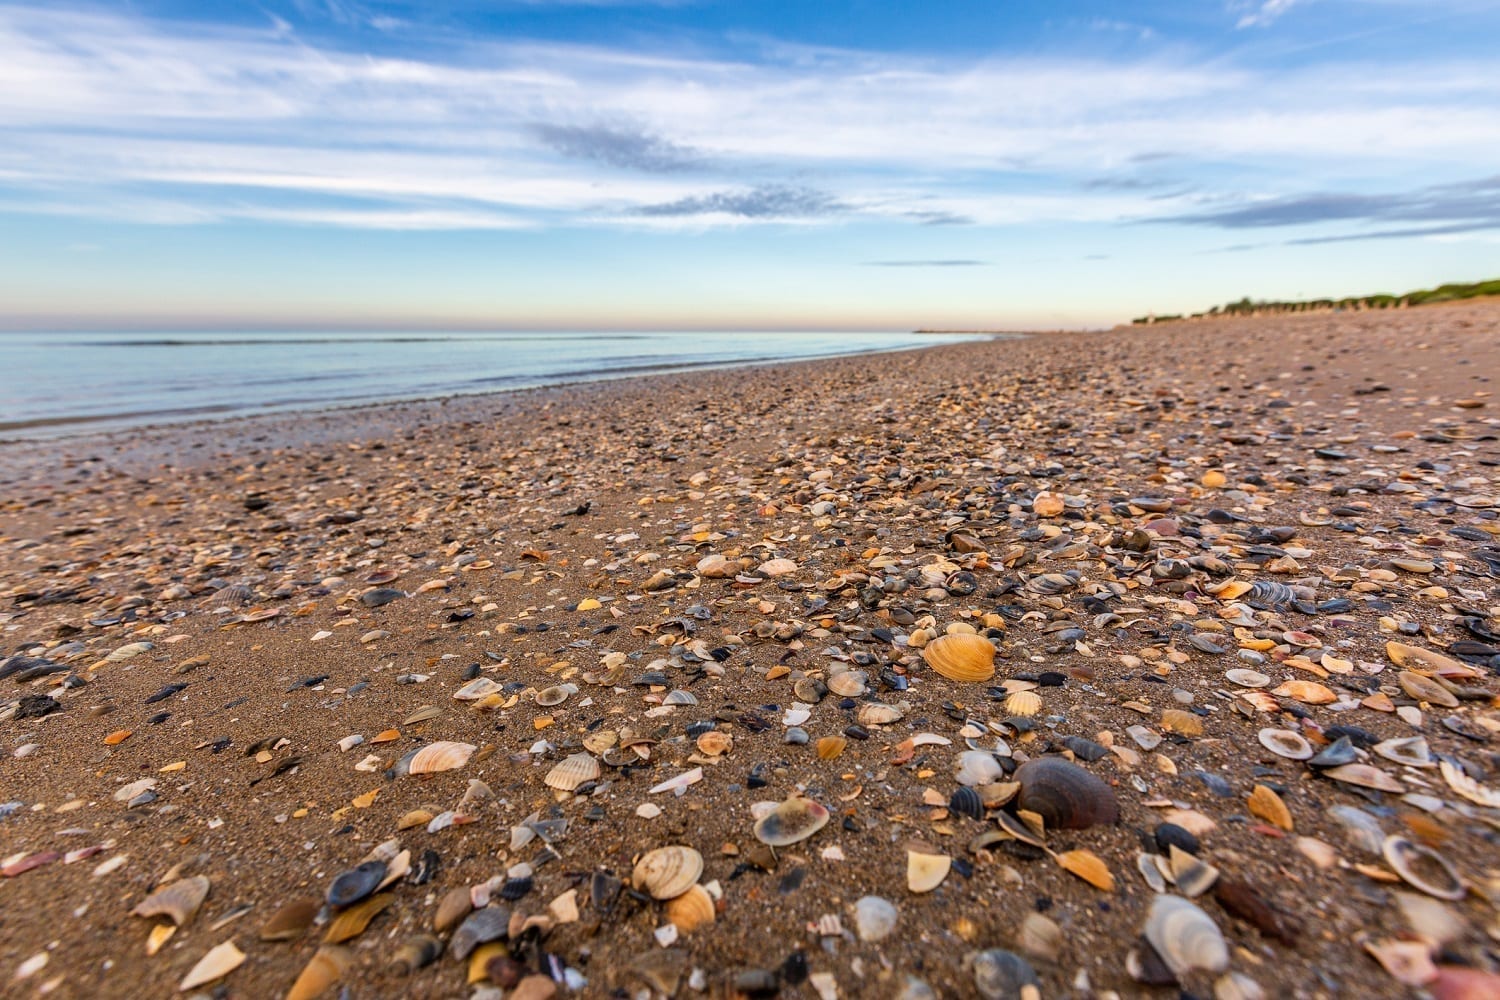 Italian beach littered with seashells: ID 123673602 © Natalia Sokko | Dreamstime.com